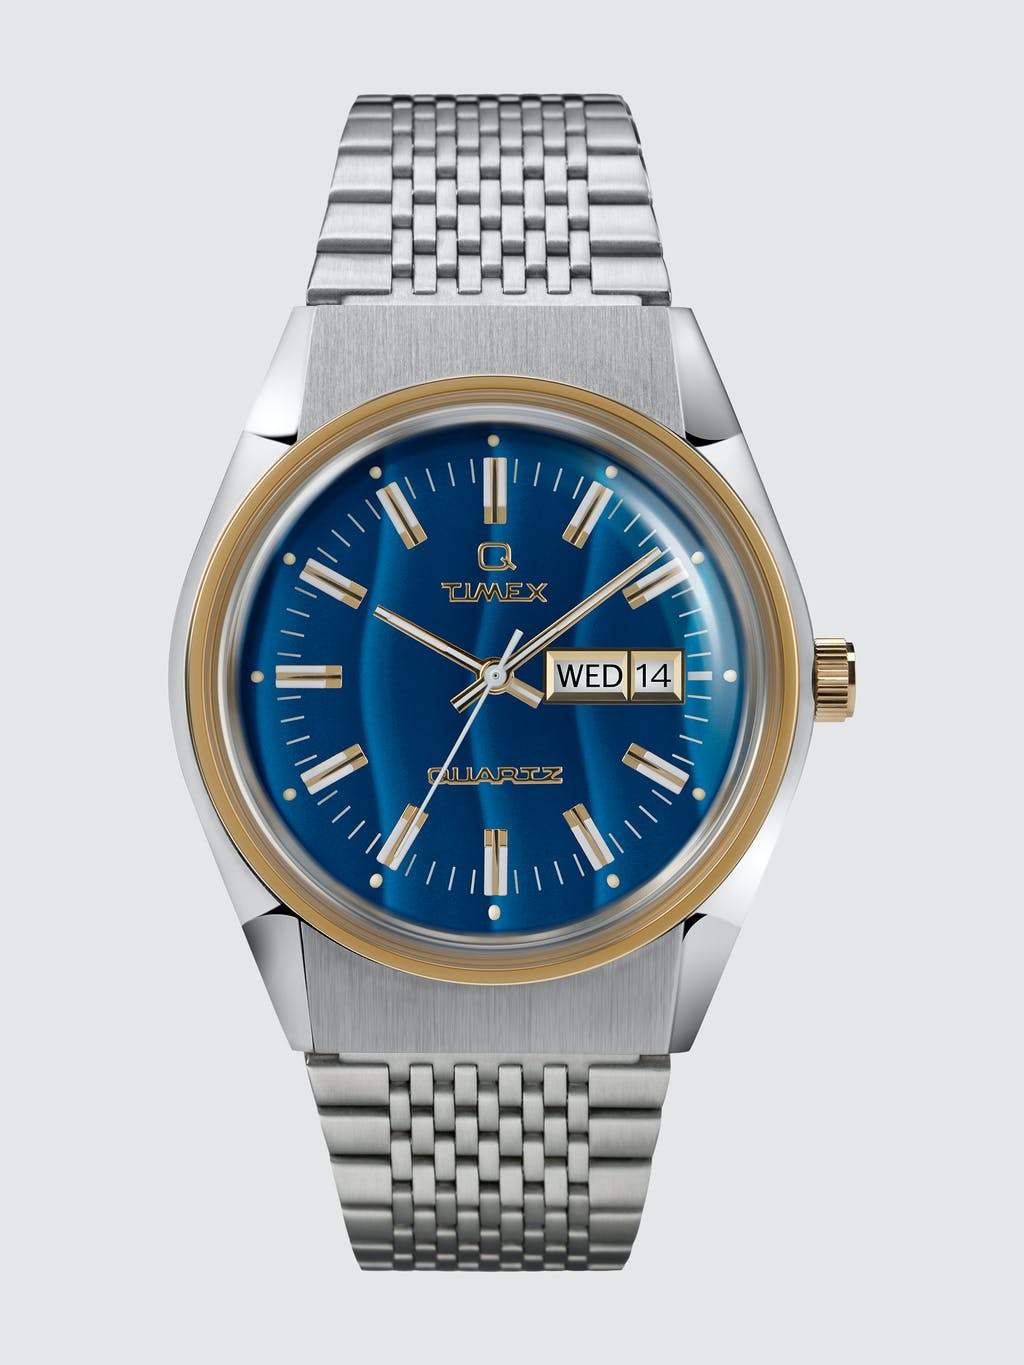 Q Timex Reissue Falcon Eye 38mm Stainless Steel Watch